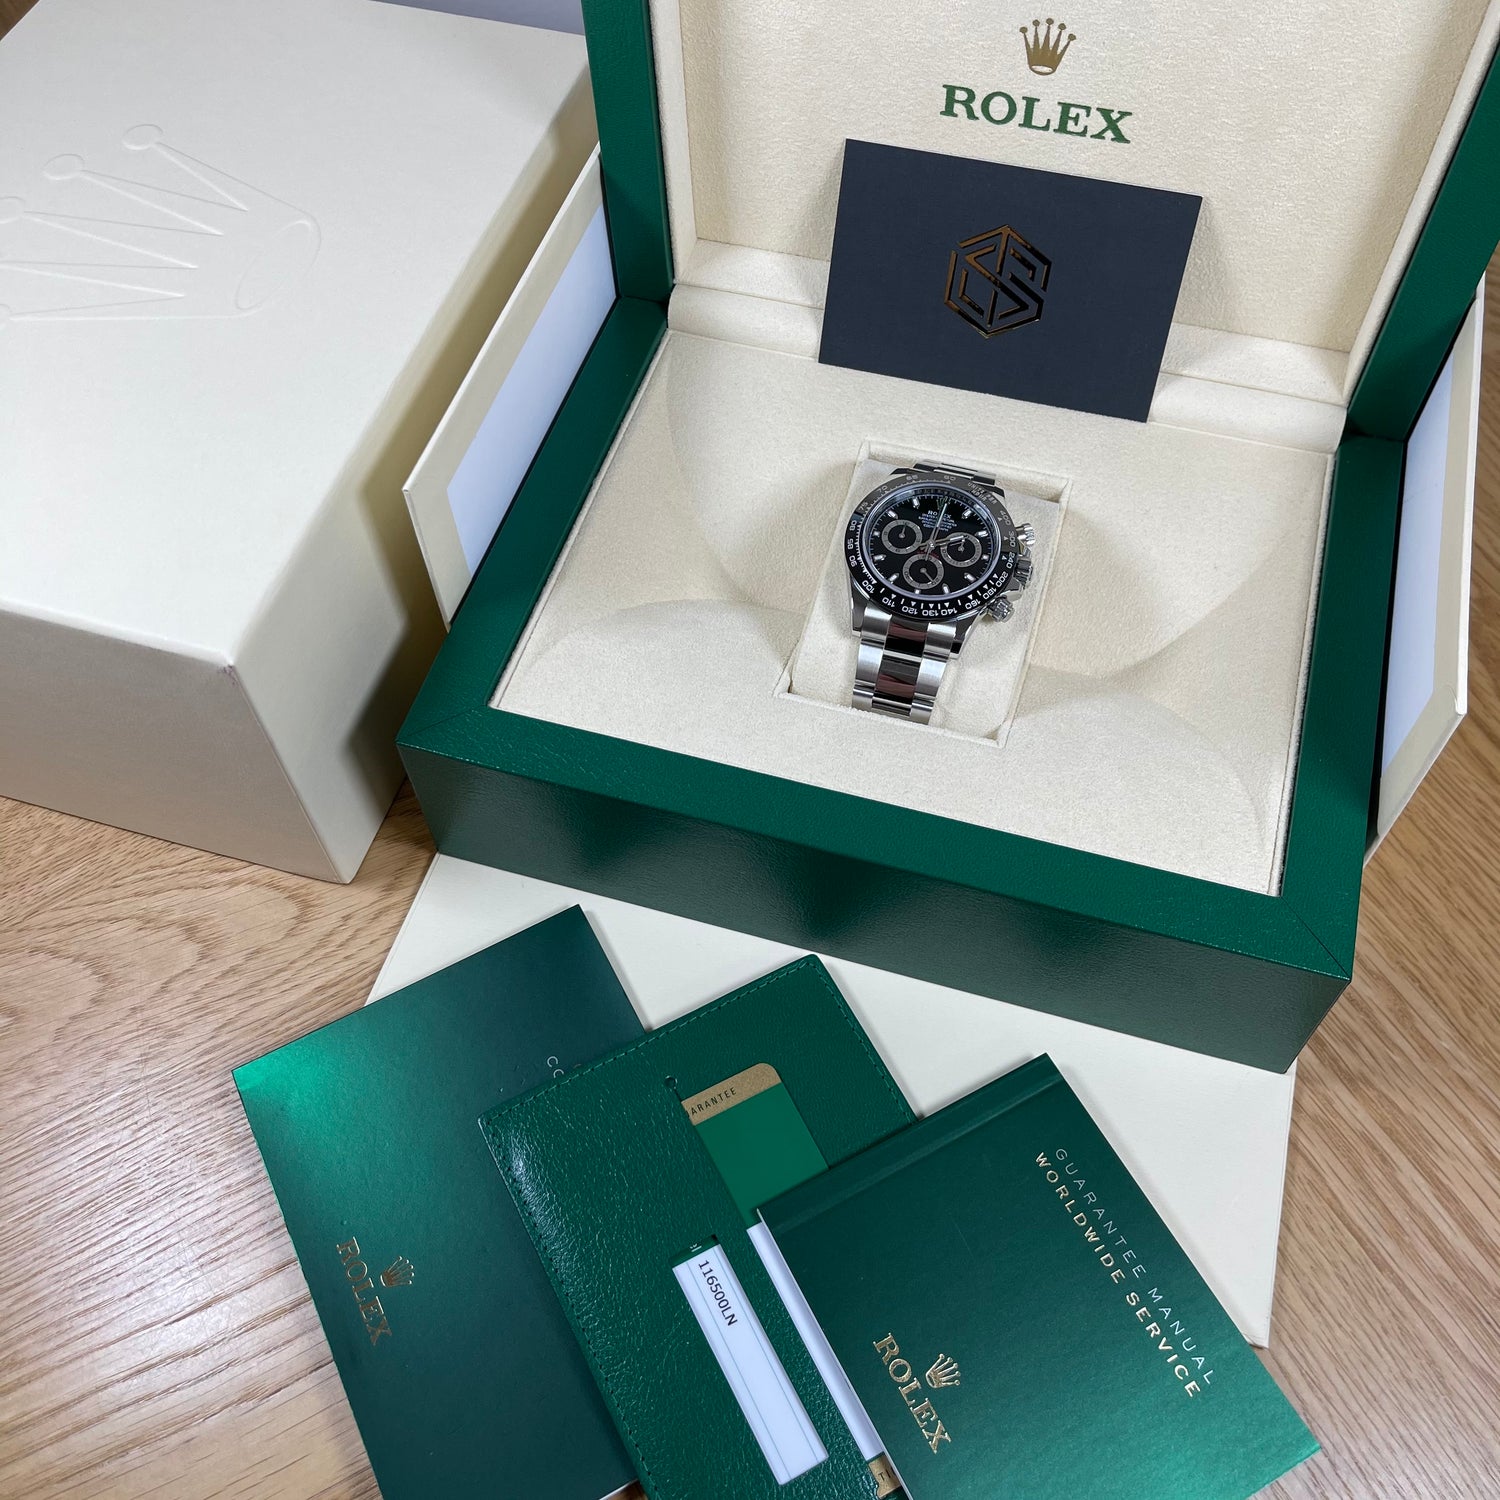 Rolex Cosmograph Daytona Ceramic Black Dial 116500LN 2018 Full Set Watch